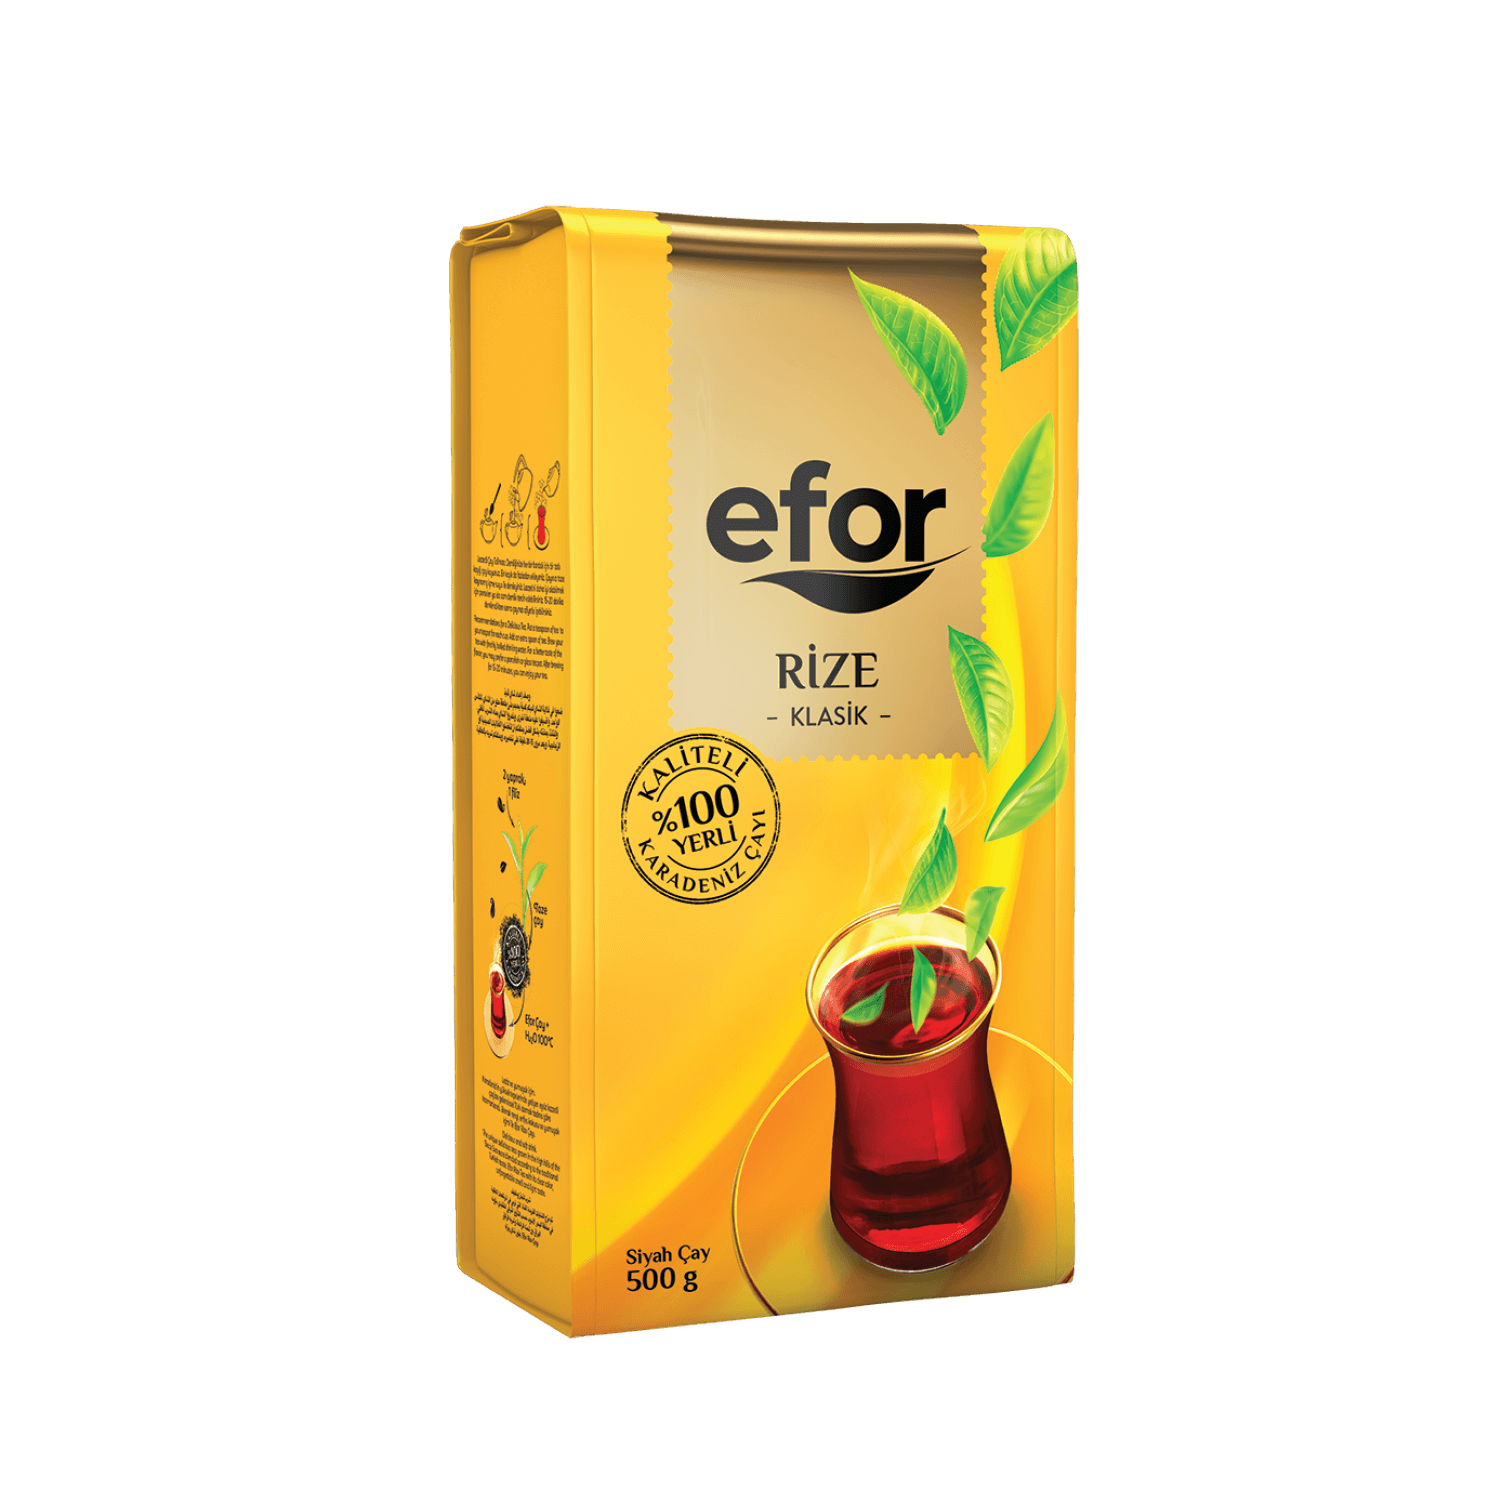 Efor Rize Classic Tea 500g